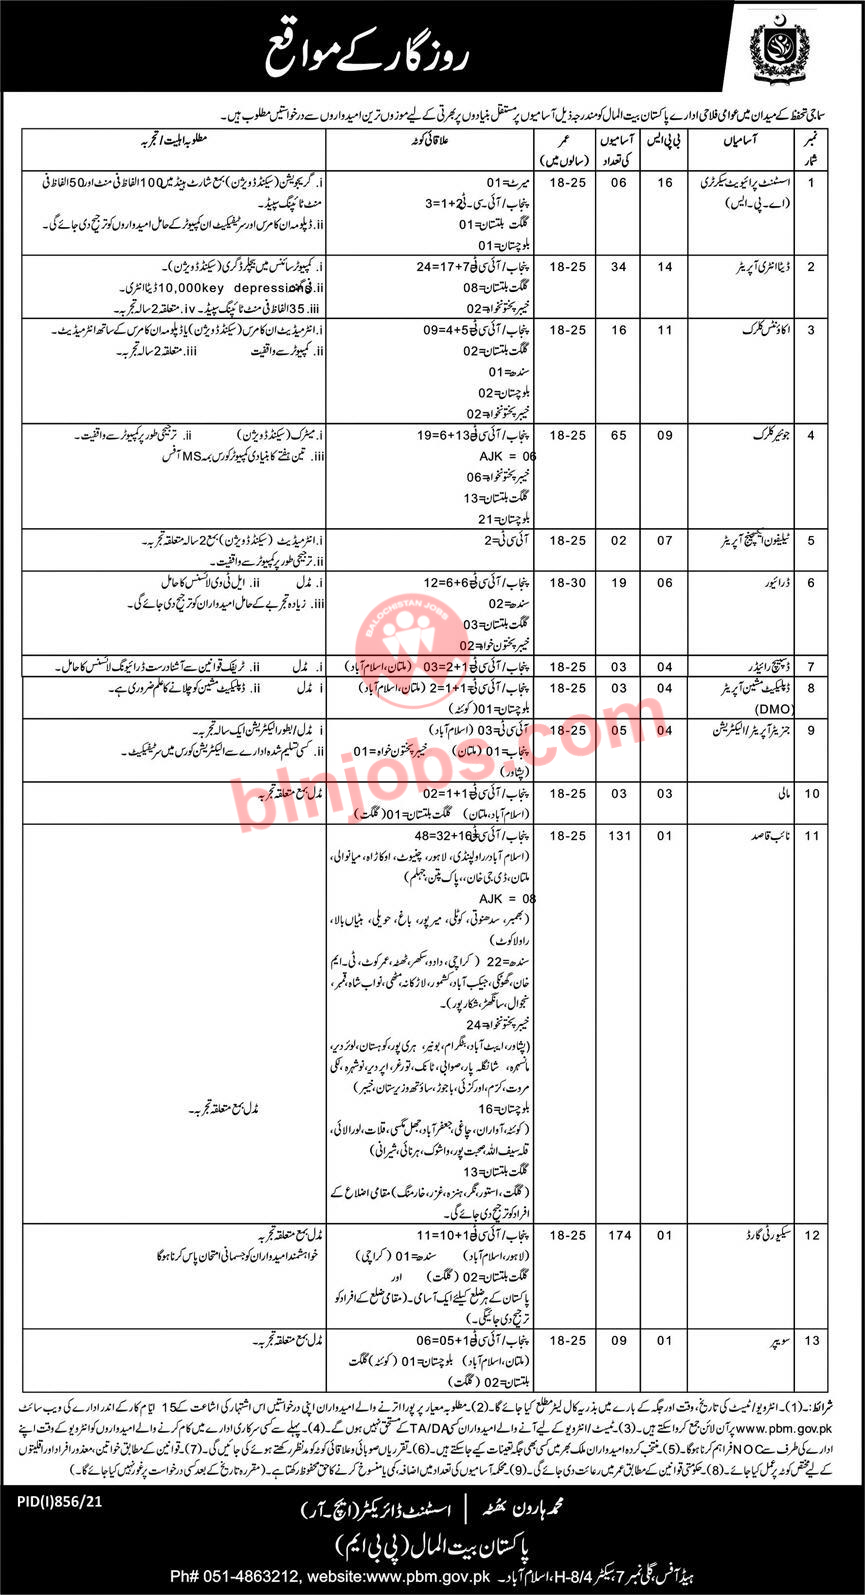 Pakistan Bait ul Mal Jobs 2021 - Application Form